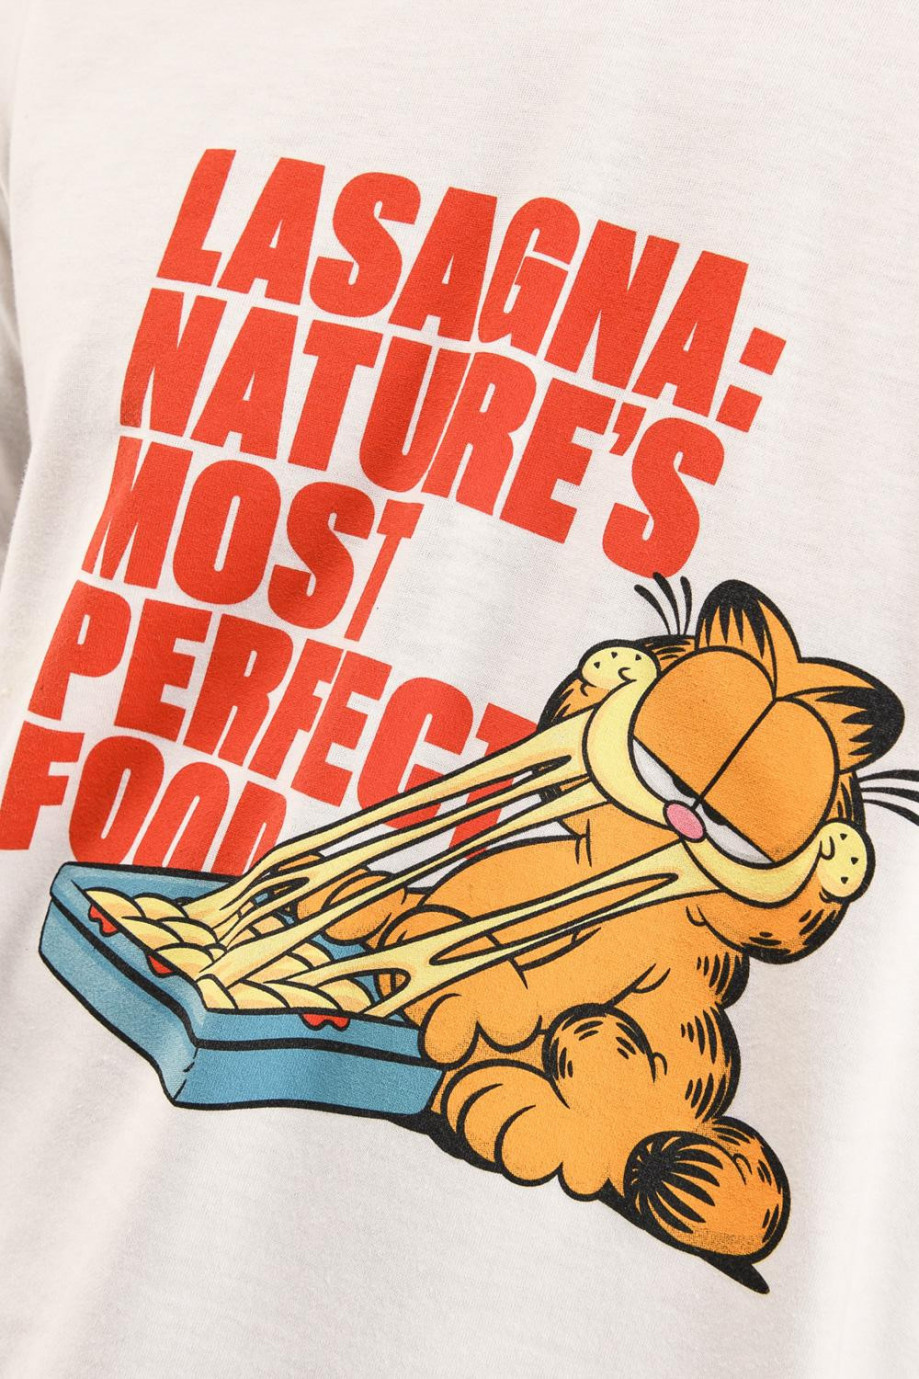 Camiseta manga corta, estampada de Garfield.